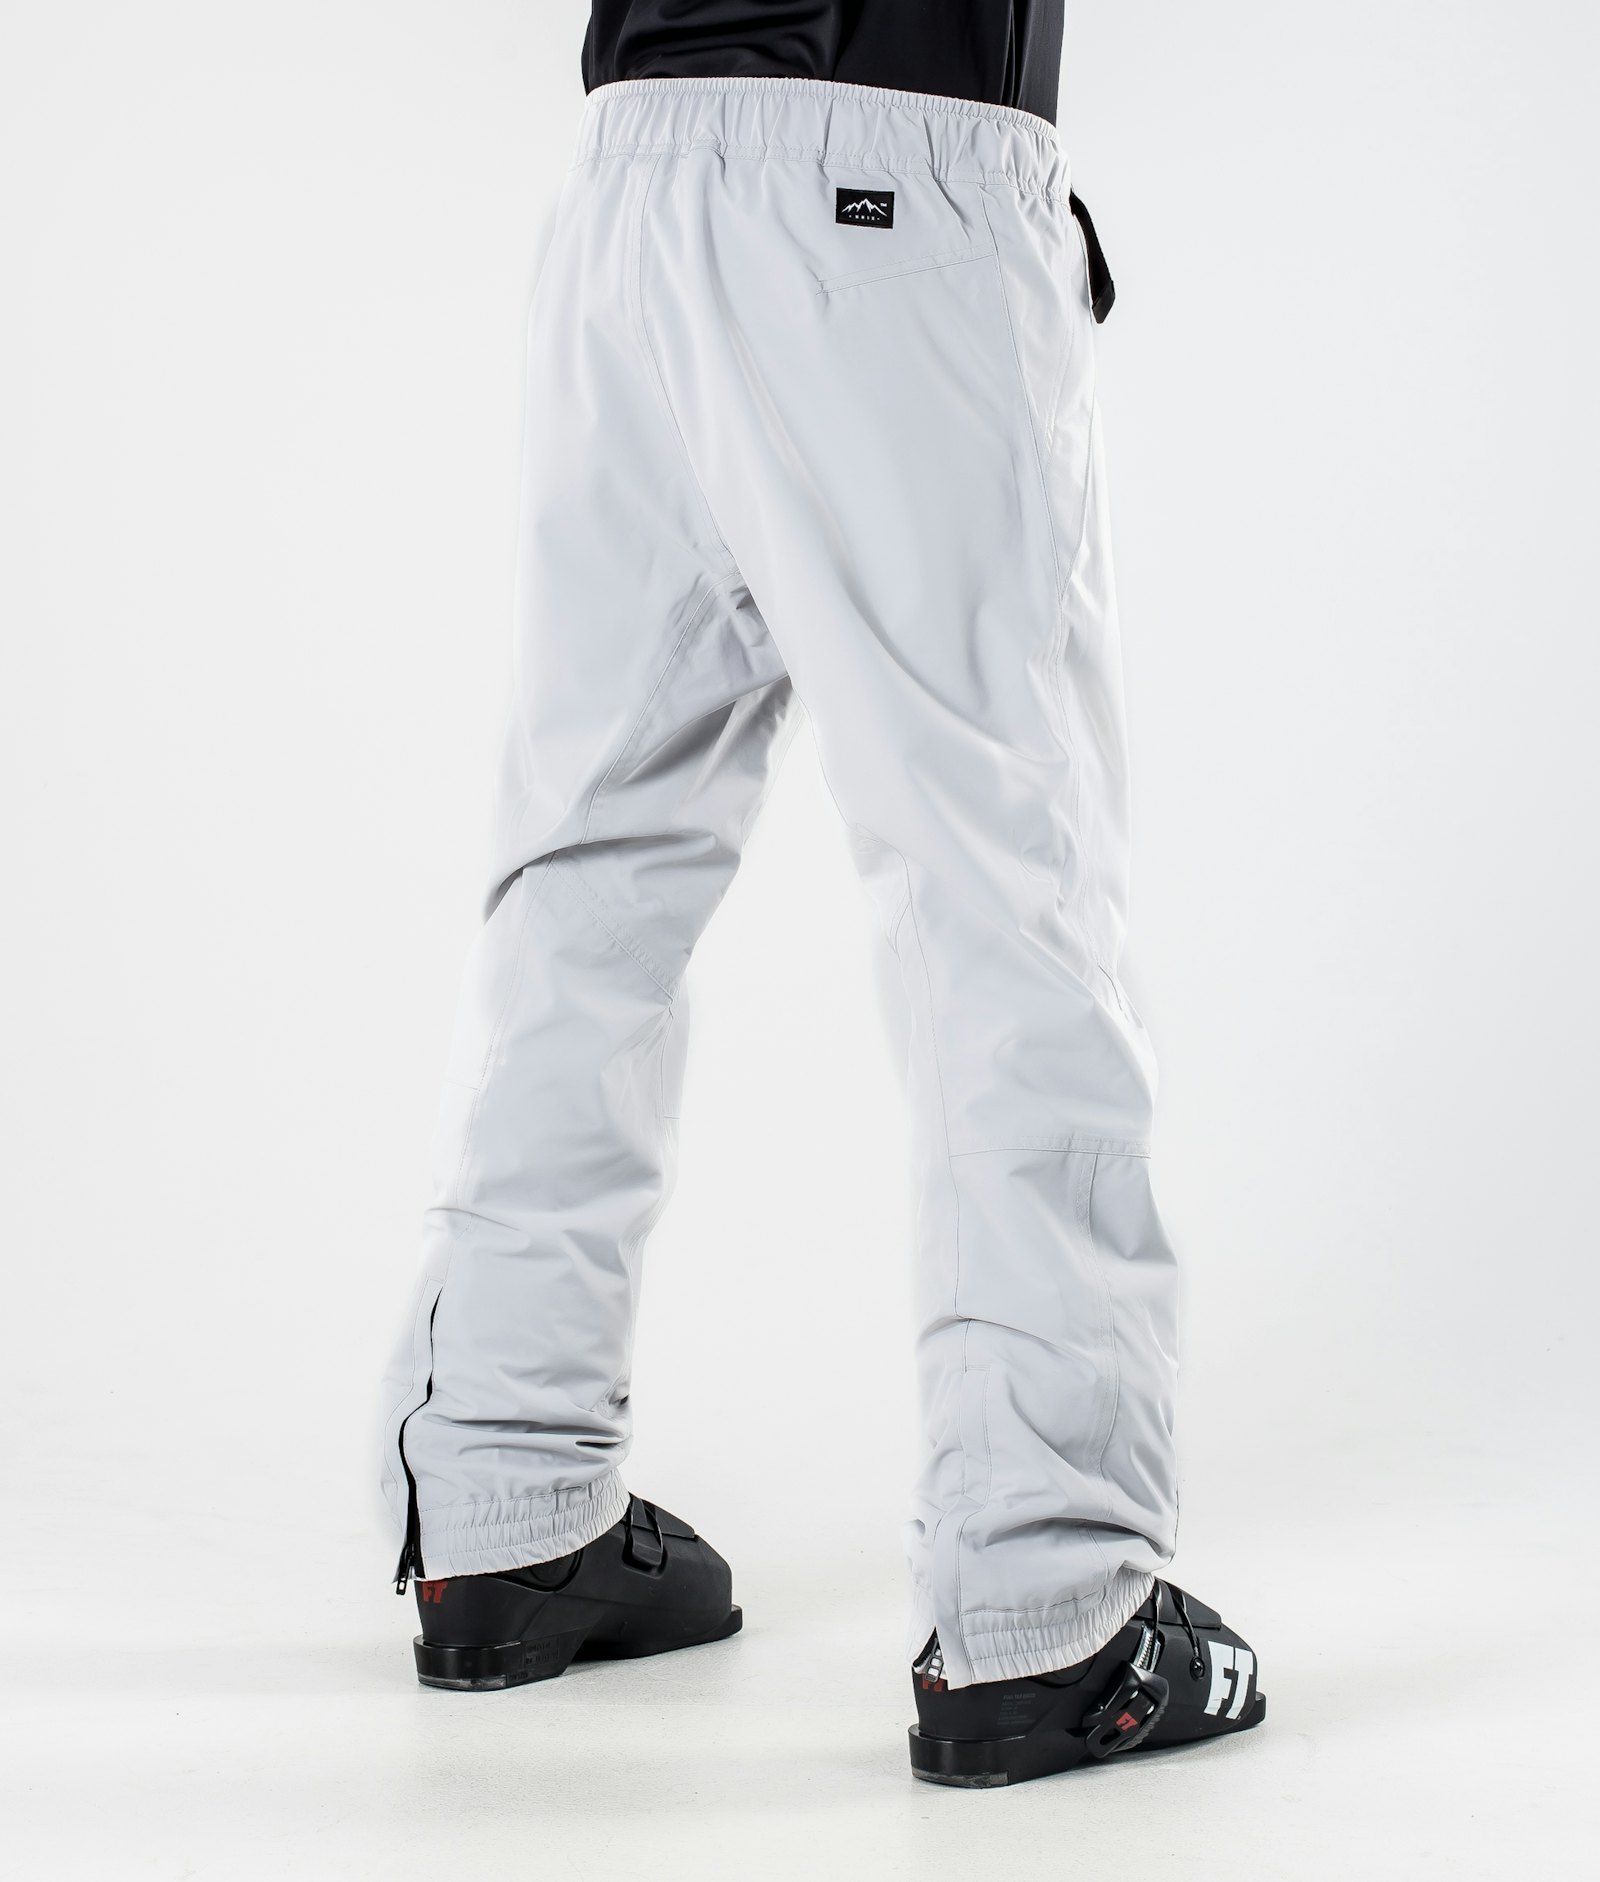 Blizzard 2020 Ski Pants Men Light Grey